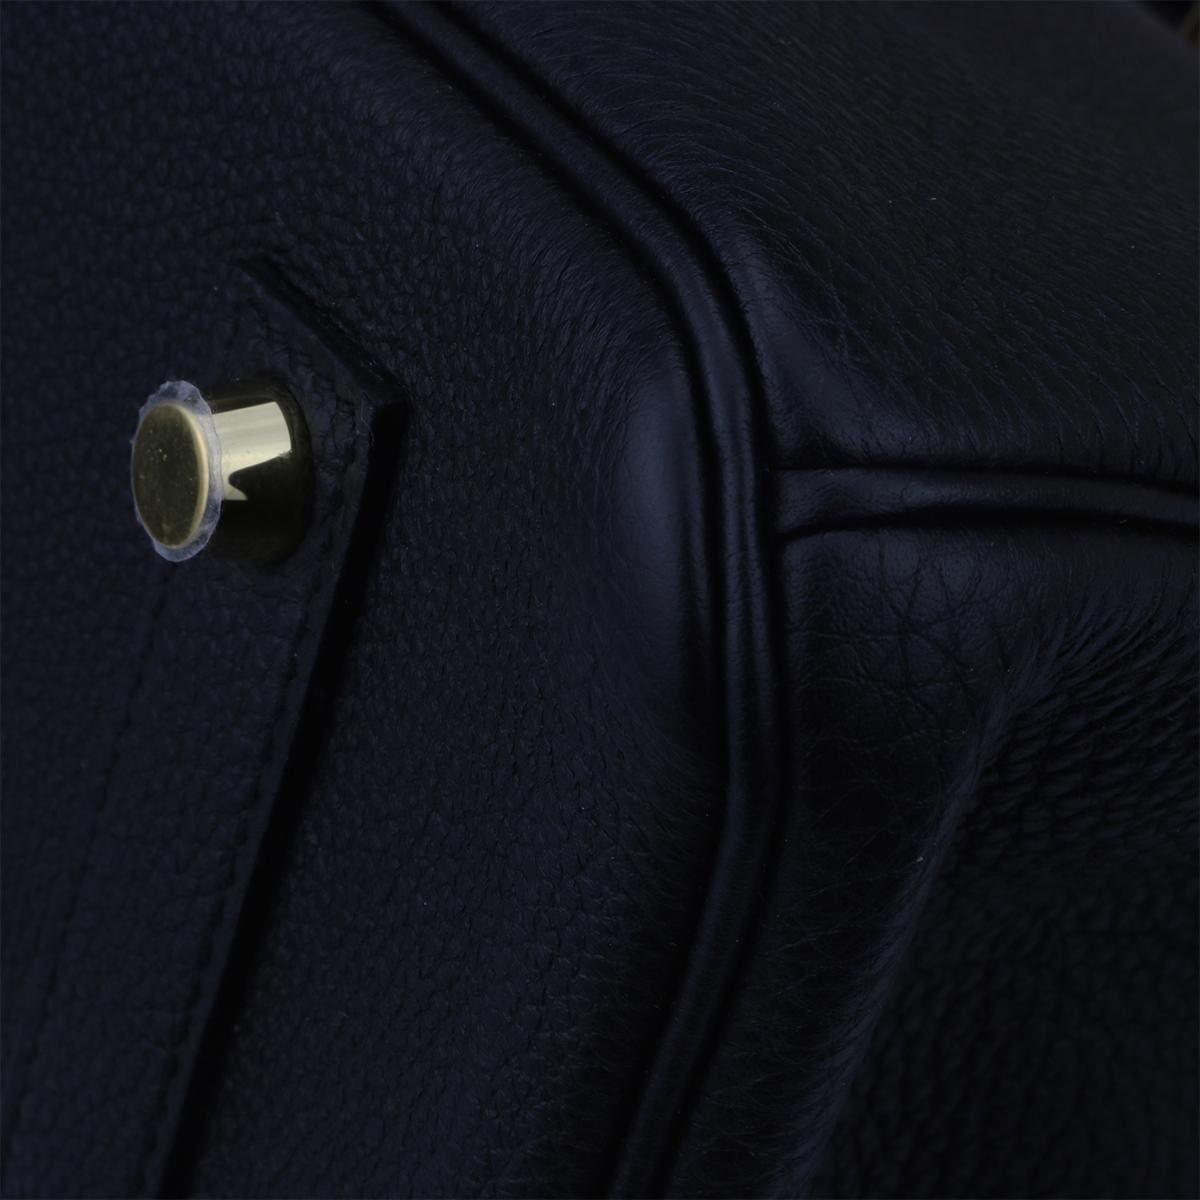 Hermès Birkin 35cm Black Togo Leather with Gold Hardware Stamp T 2015 4